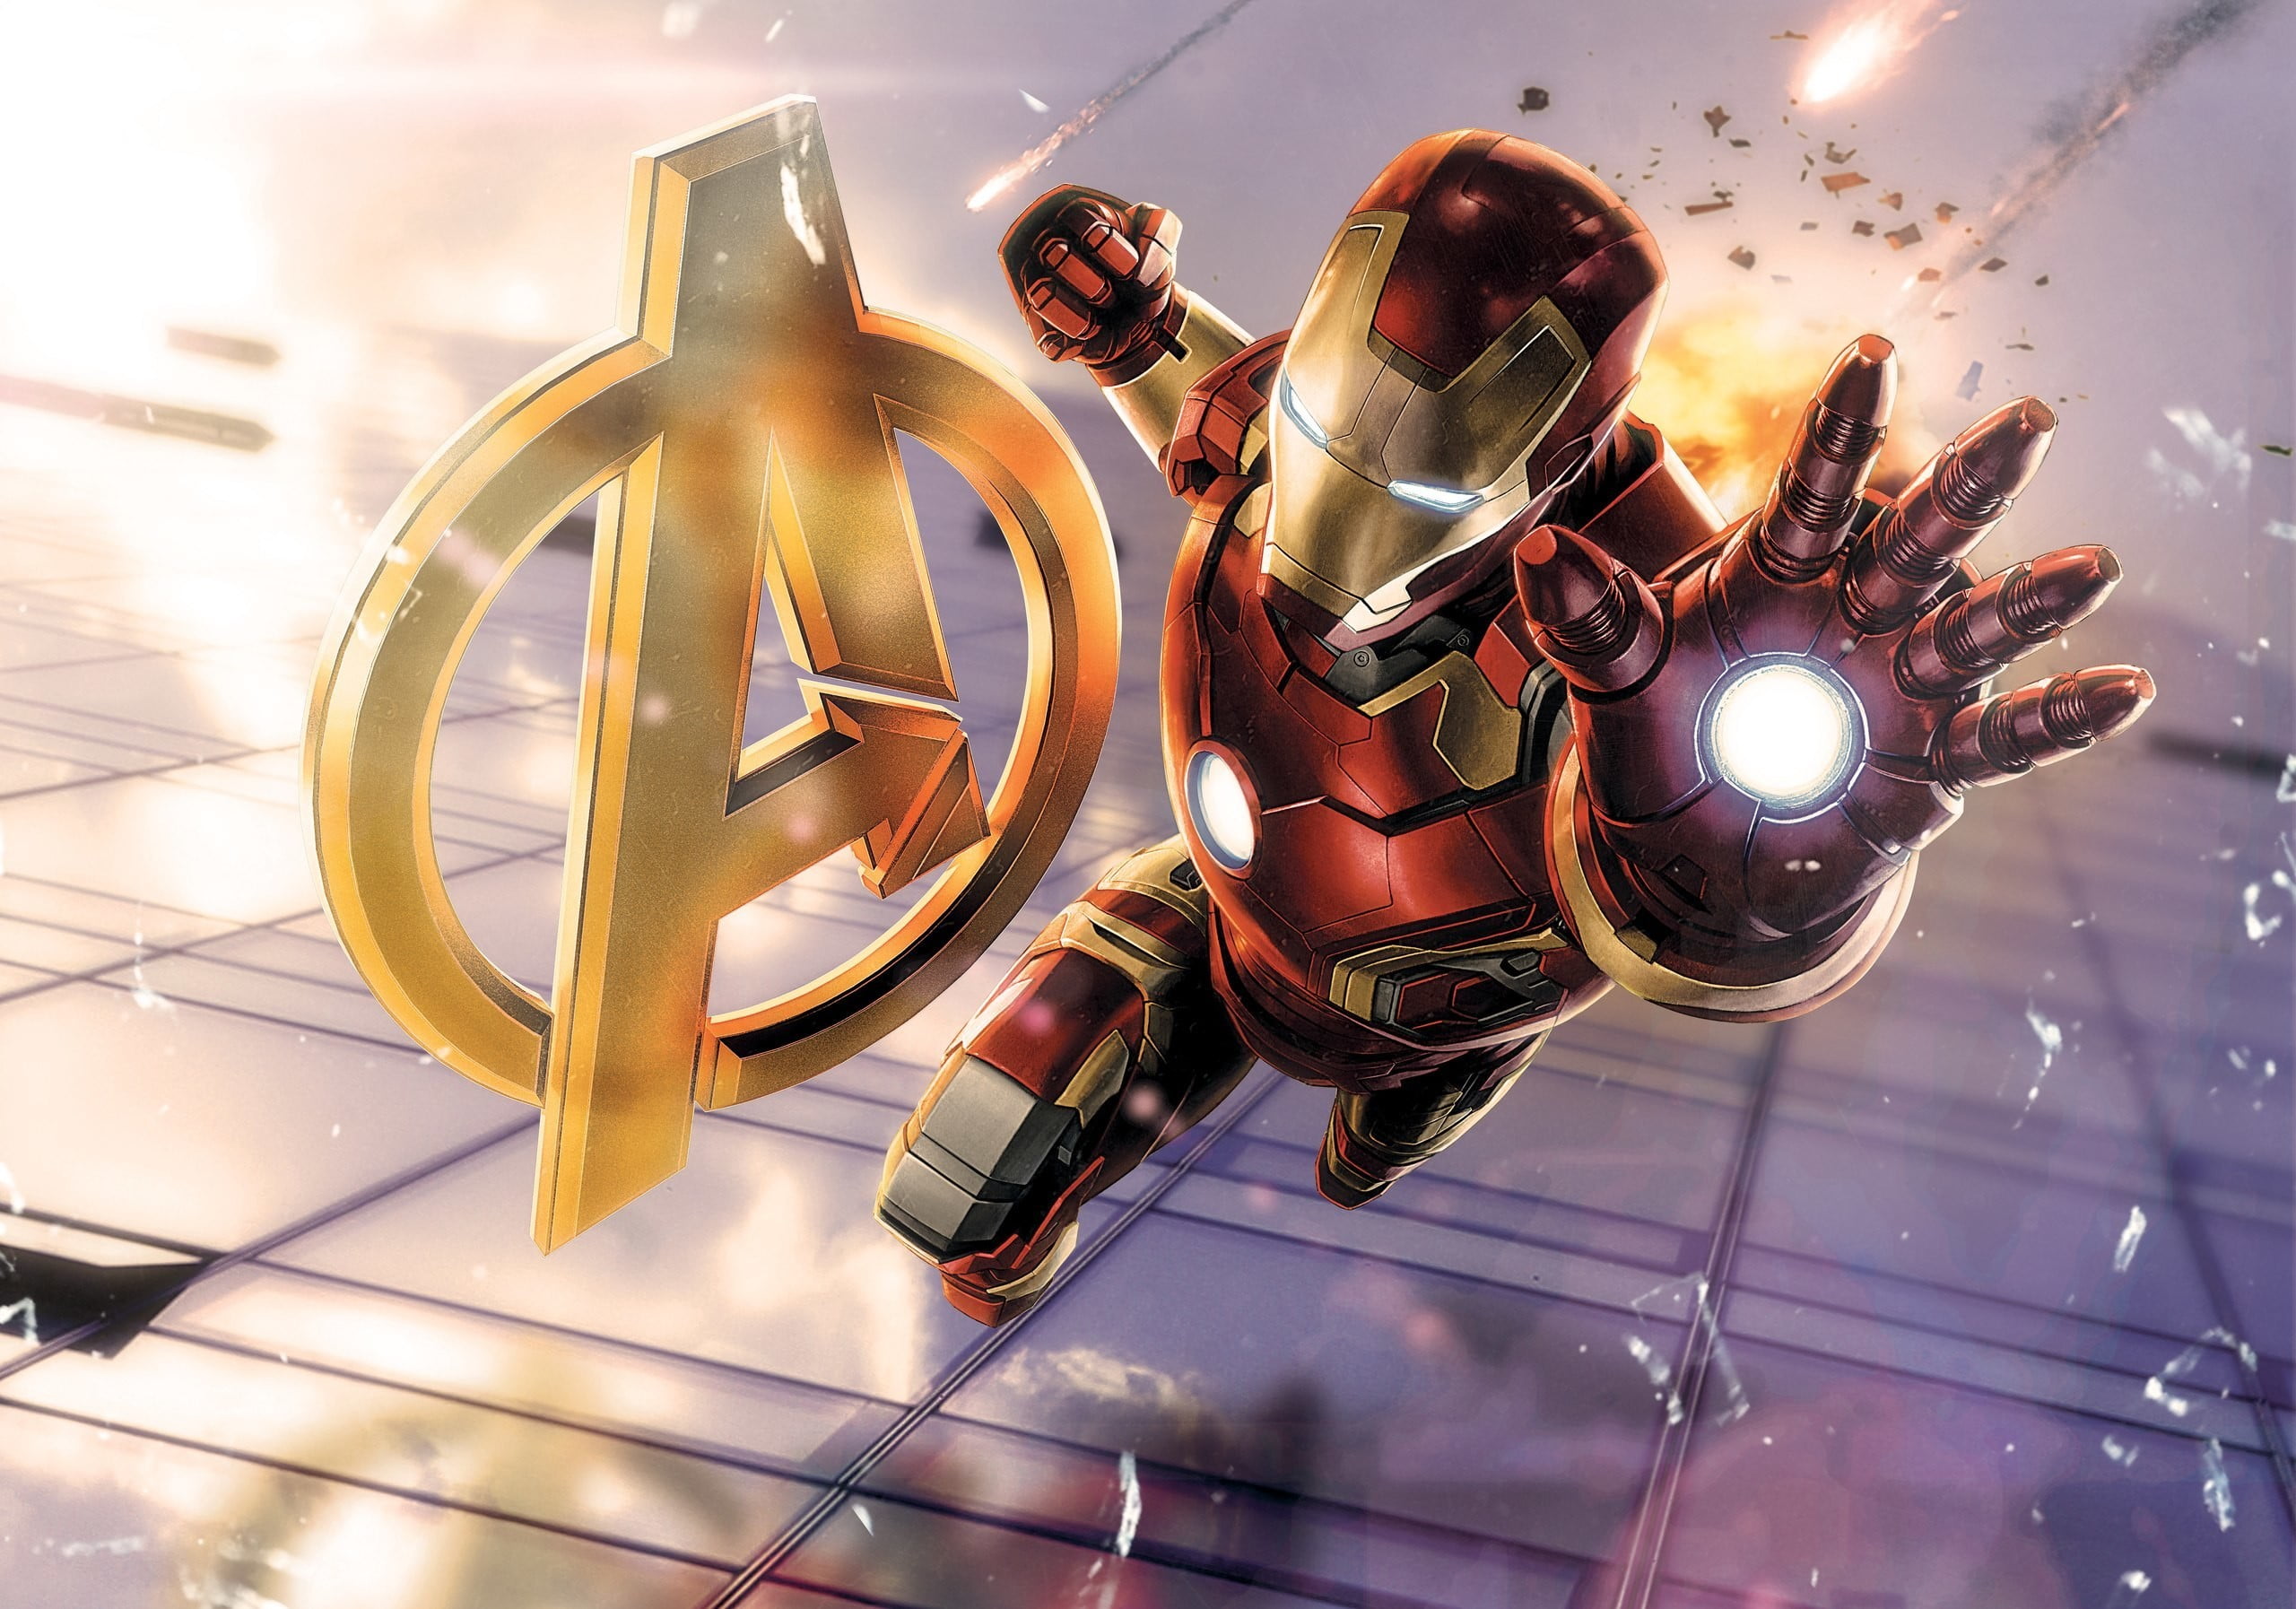 Iron Man wallpaper, broken glass, superhero, Avengers: Age of Ultron